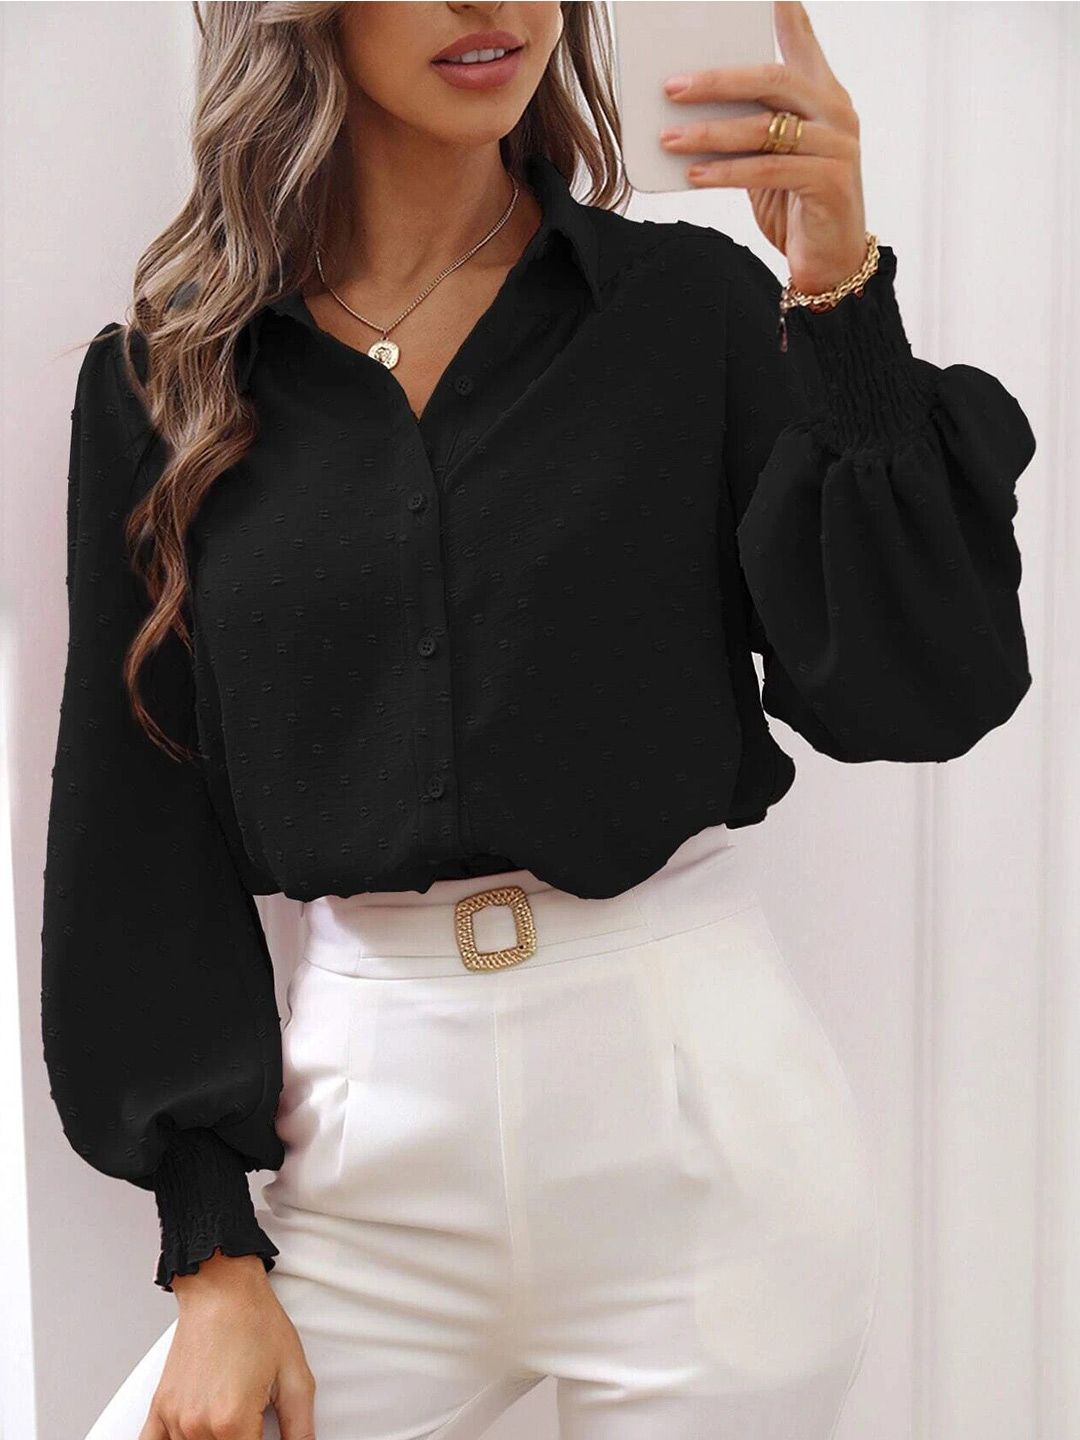 BoStreet Black Self Design Puff Sleeve Shirt Style Top Price in India